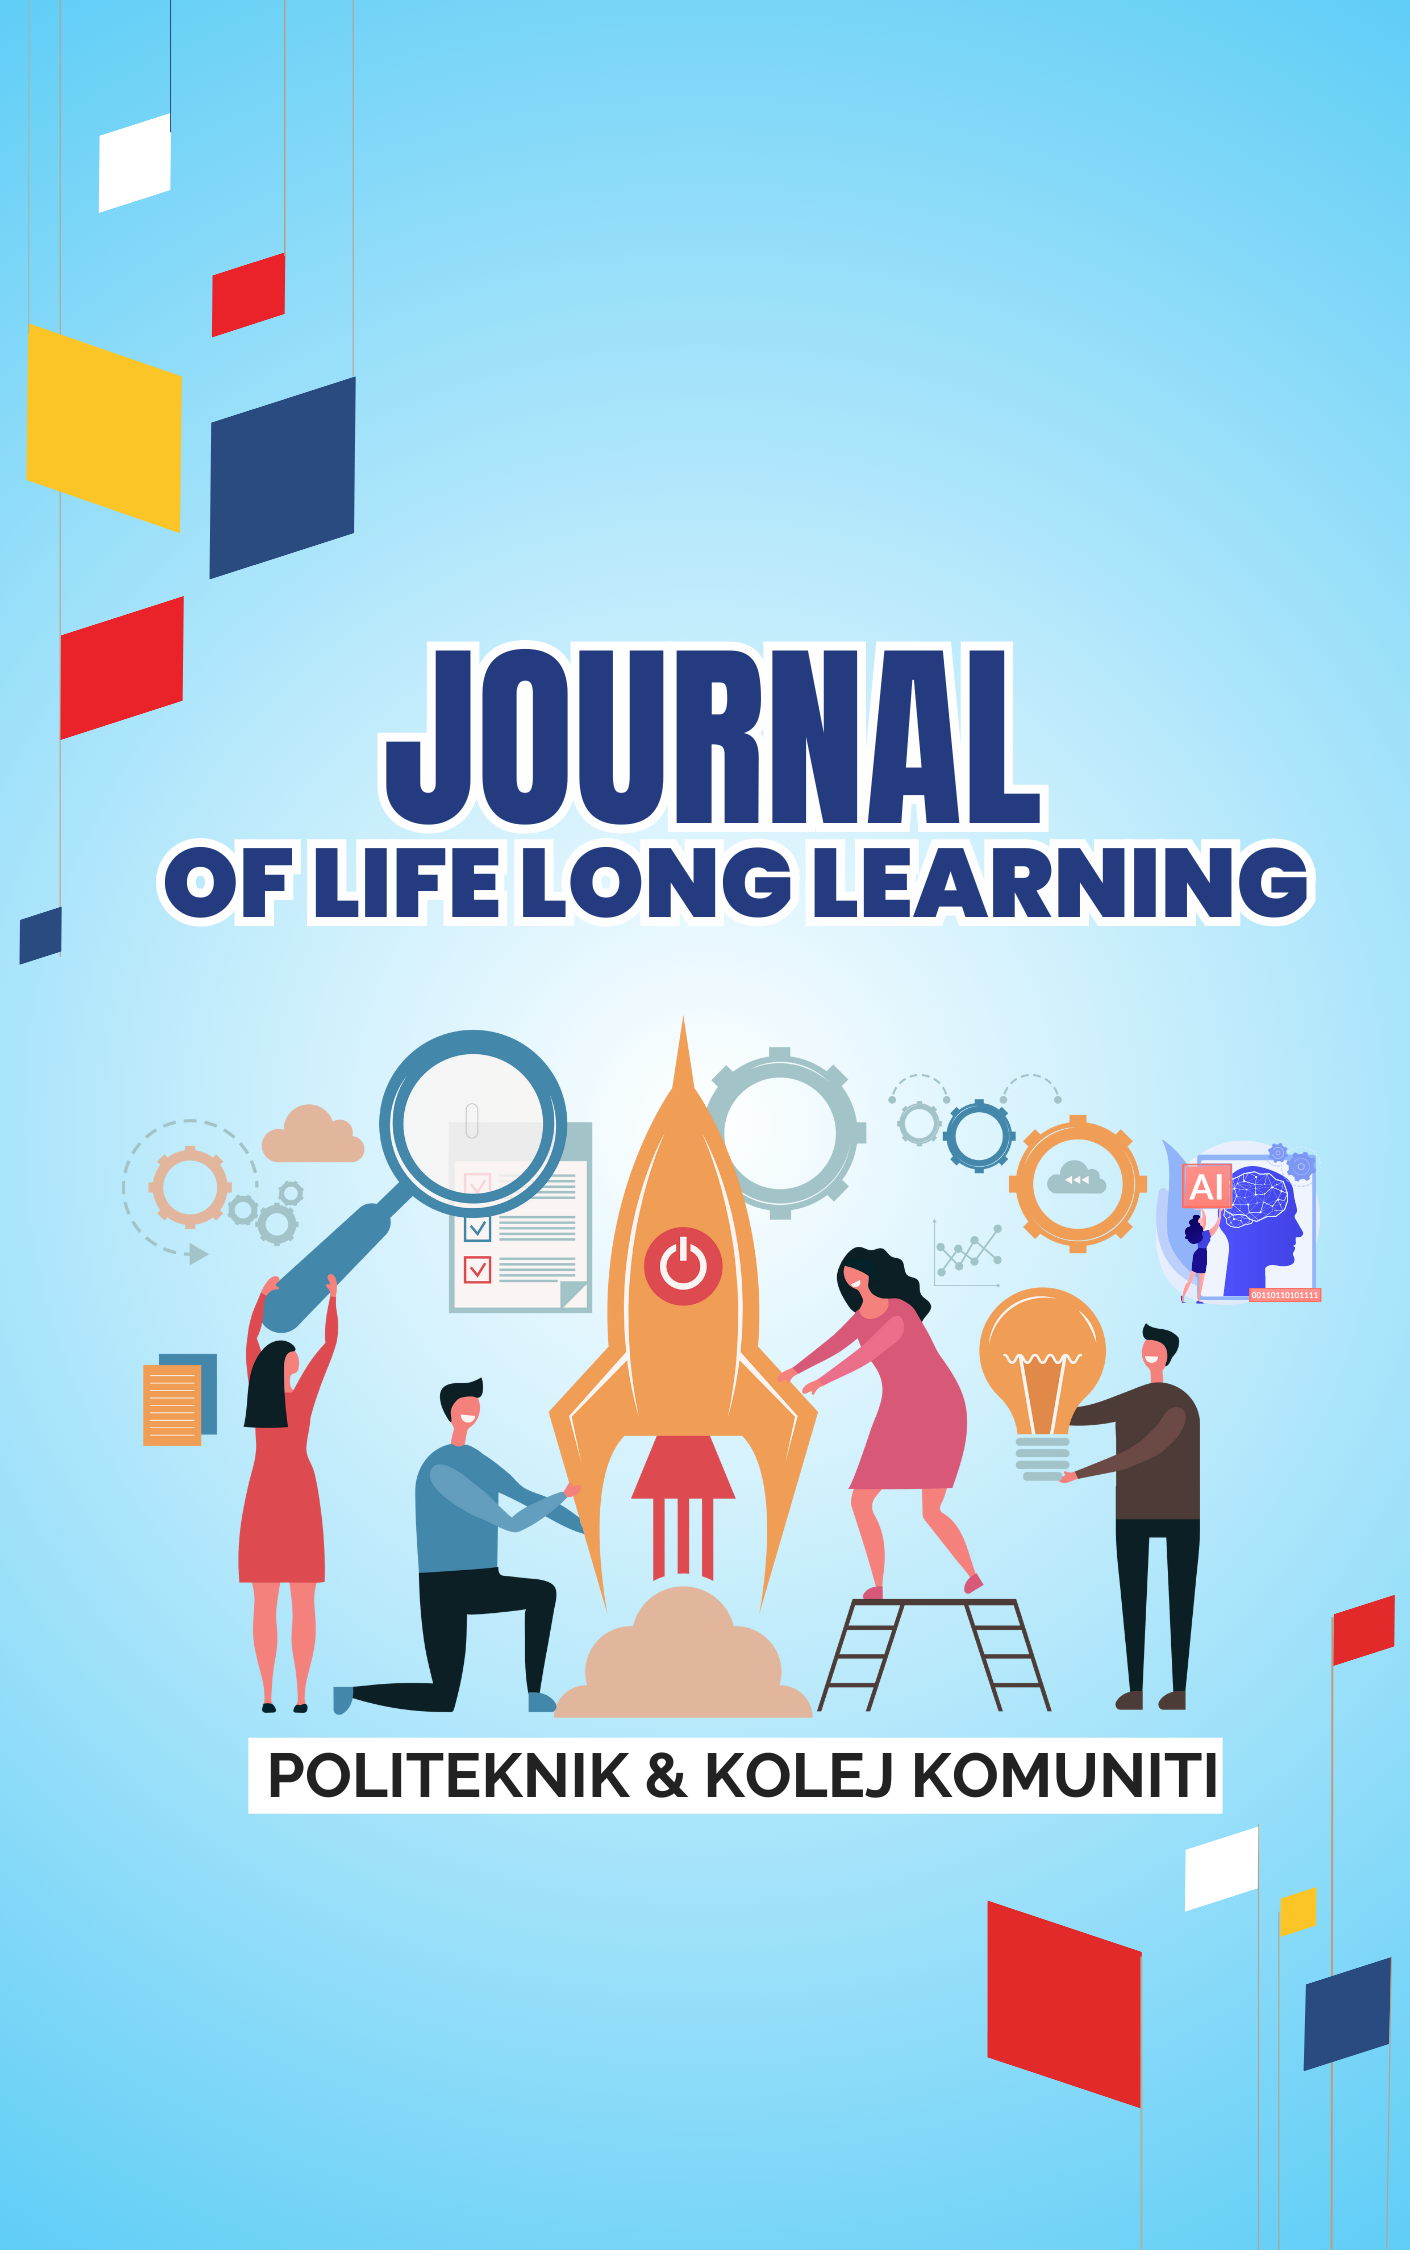 					View Vol. 4 No. 1 (2020): Politeknik & Kolej Komuniti Journal of Life Long Learning
				